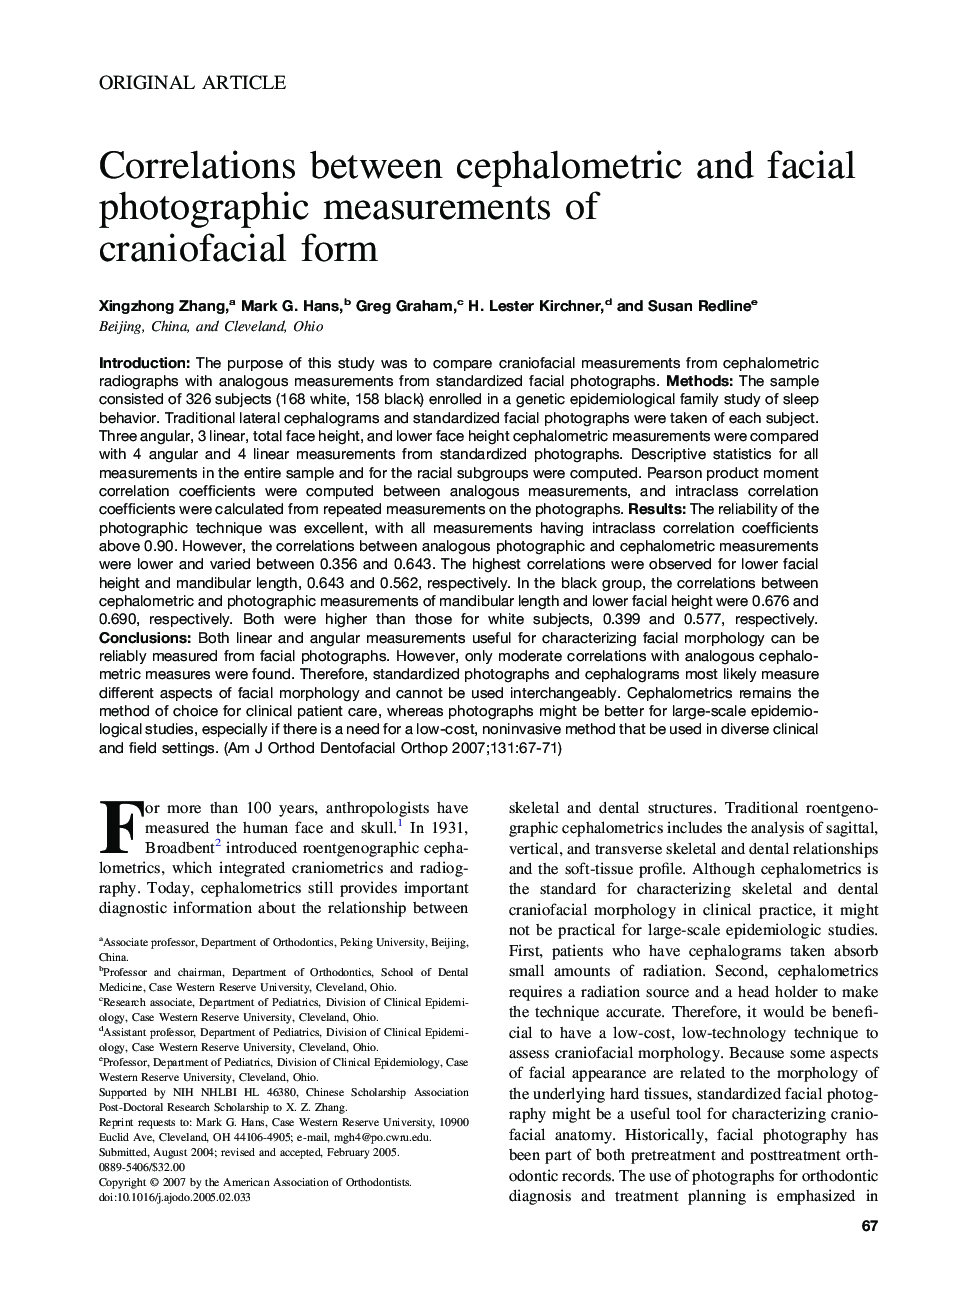 Correlations between cephalometric and facial photographic measurements of craniofacial form 